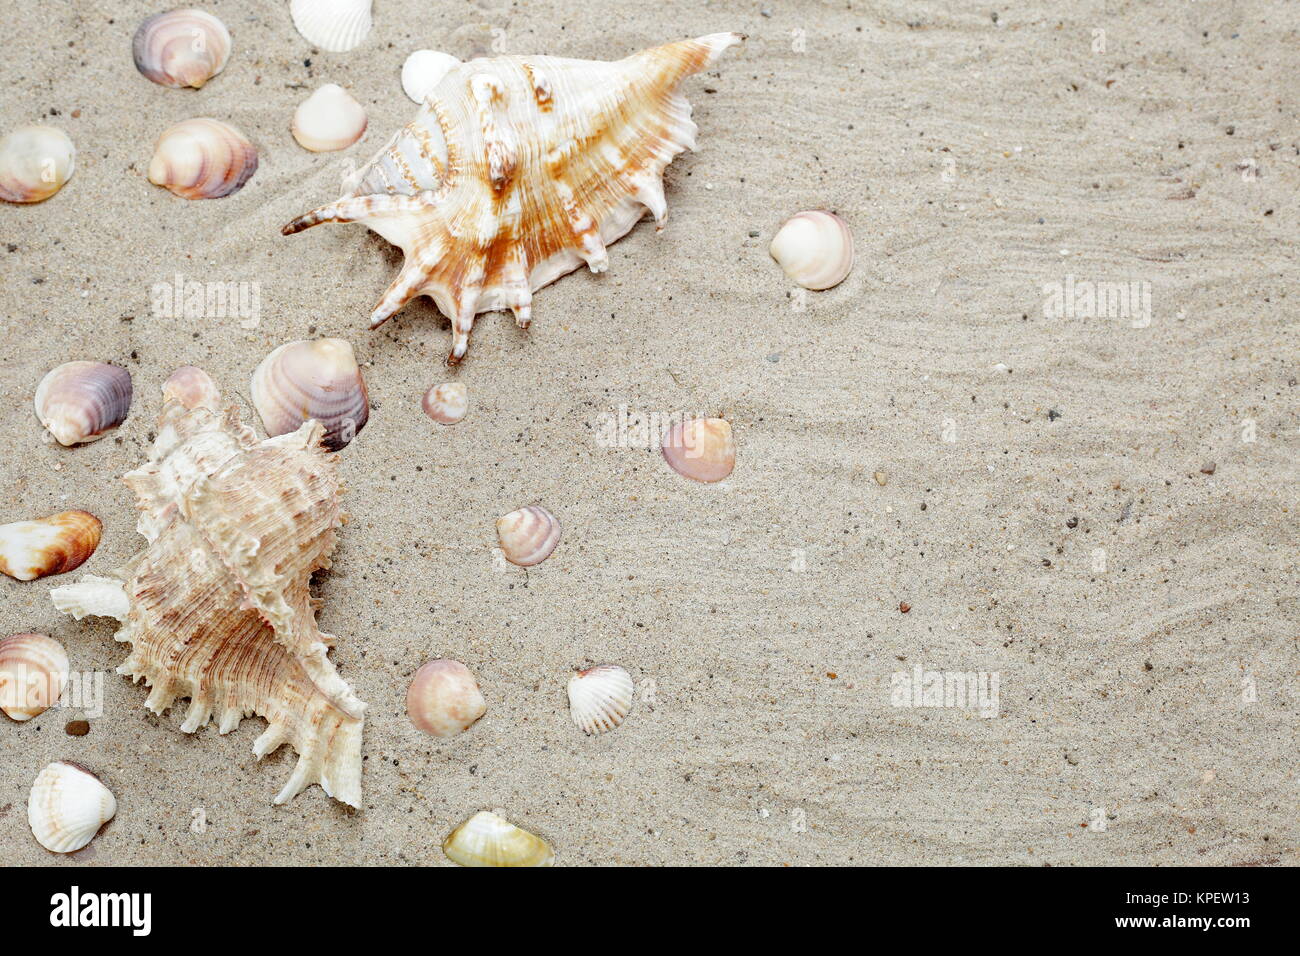 shells on the sandy beach Stock Photo